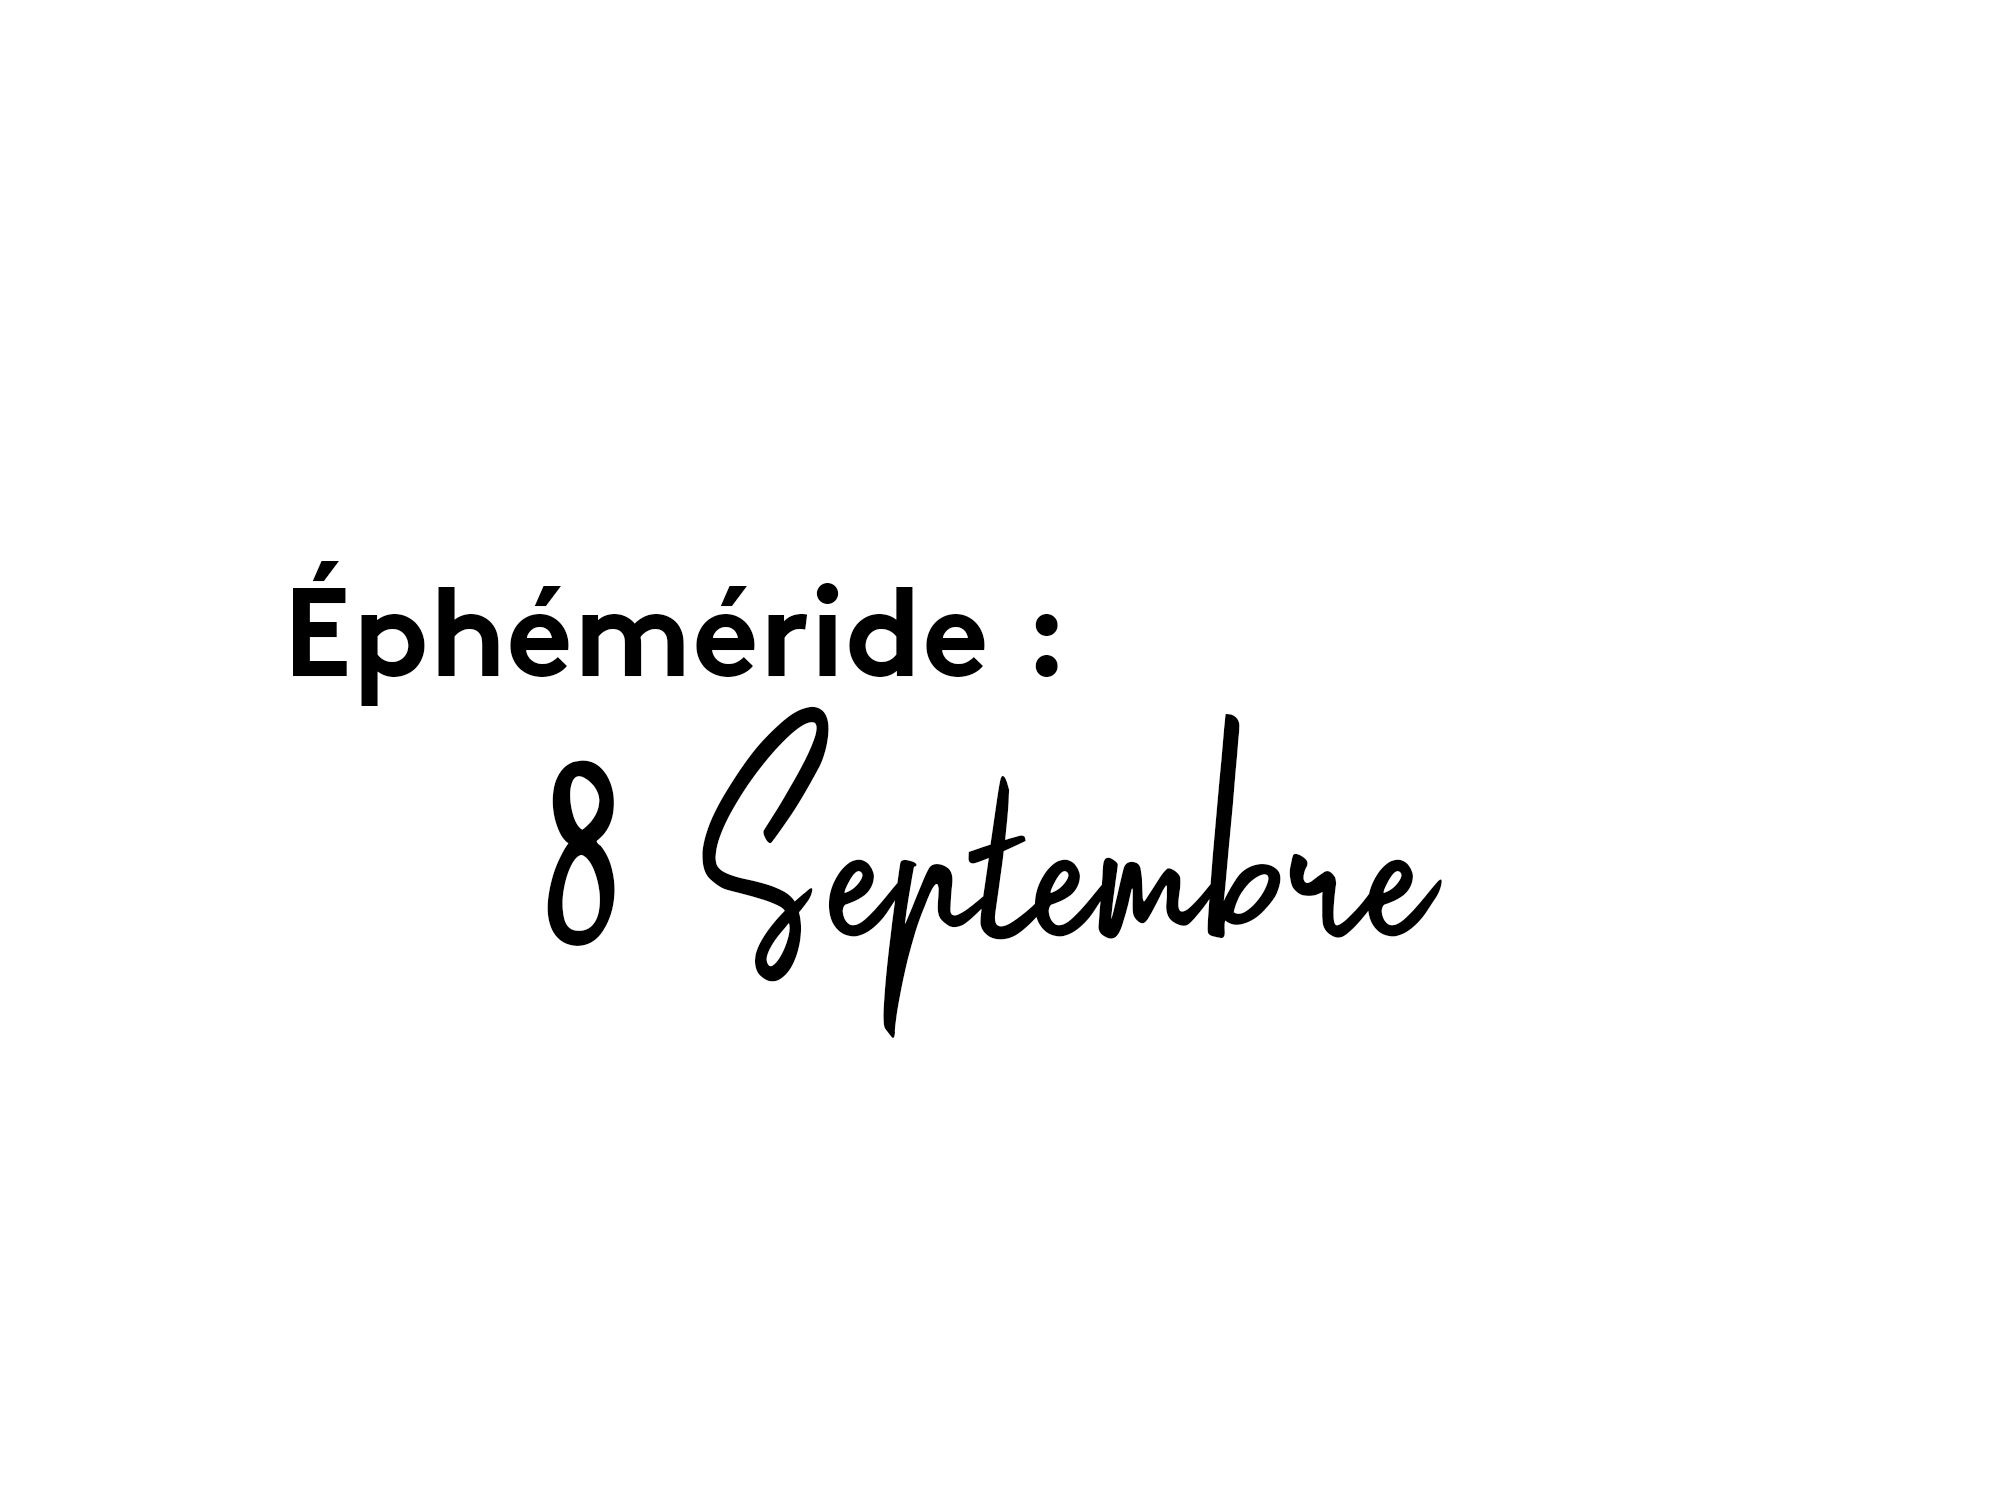 Ephemeride du 8 septembre